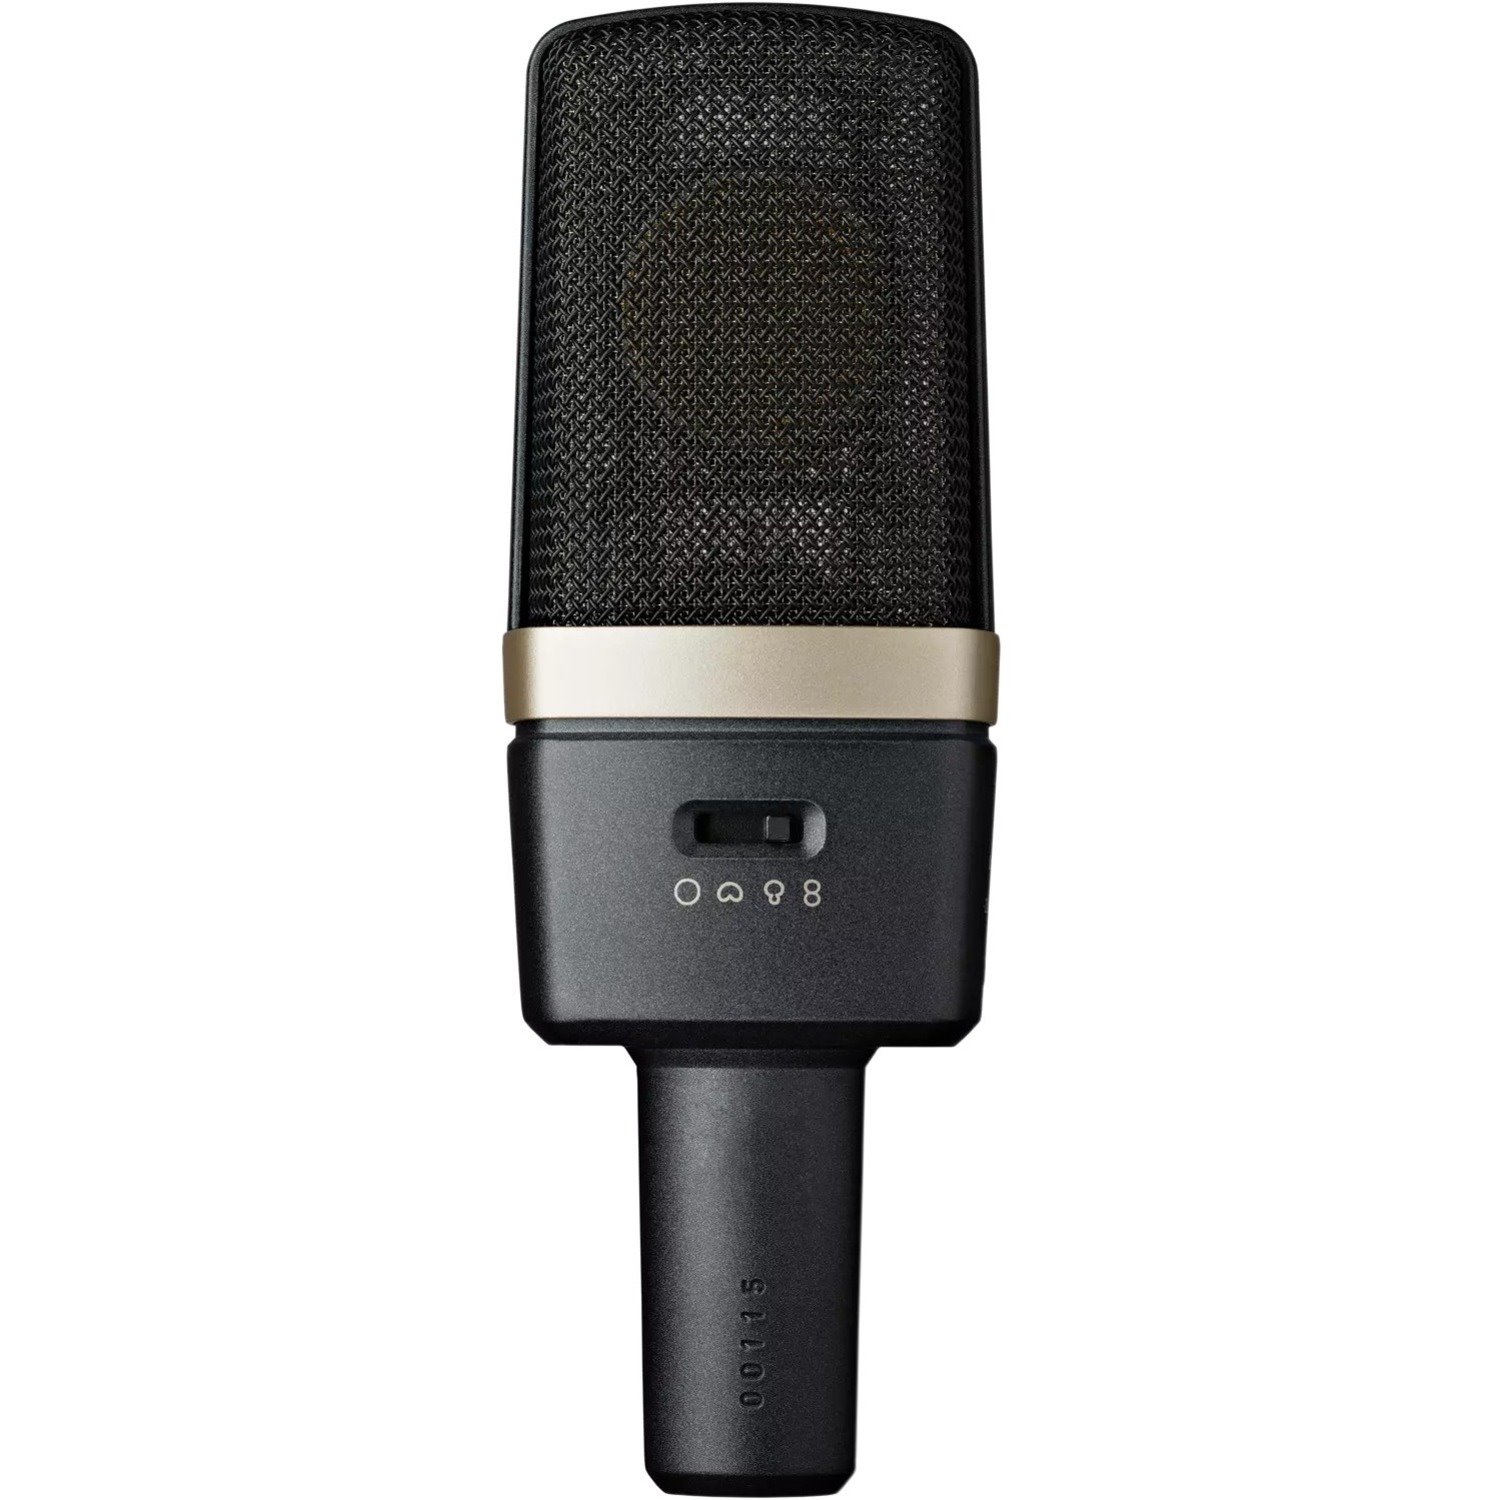 AKG C314 Rugged Wired Condenser Microphone - Black